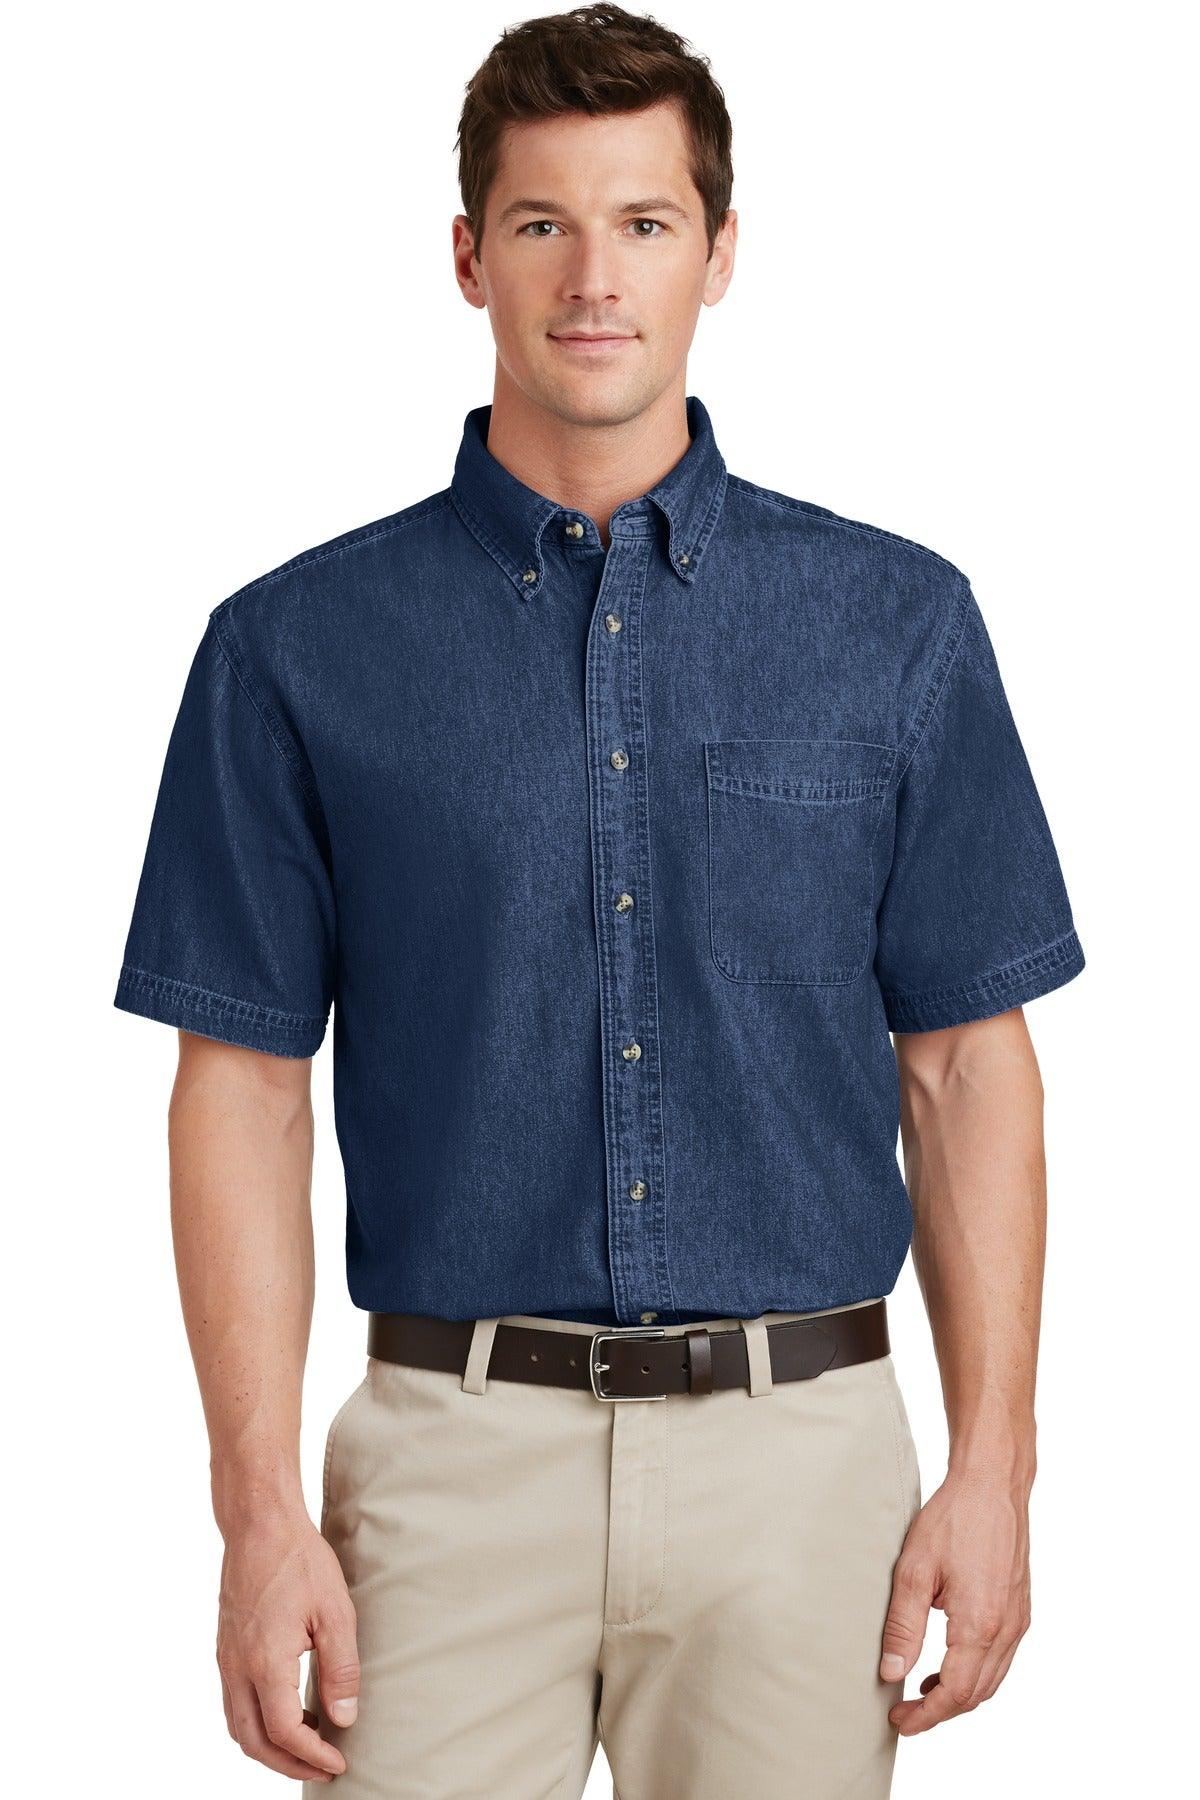 Port & Company - Short Sleeve Value Denim Shirt. SP11 - Dresses Max